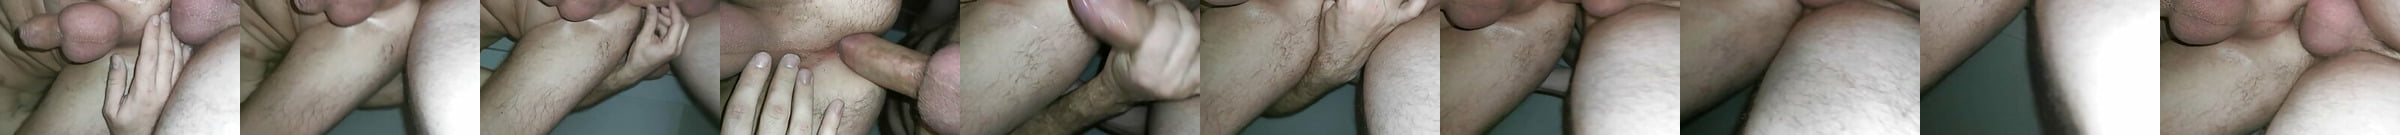 Pipi Cu Pula In Cur Gay Amateur Porn Video 63 XHamster XHamster